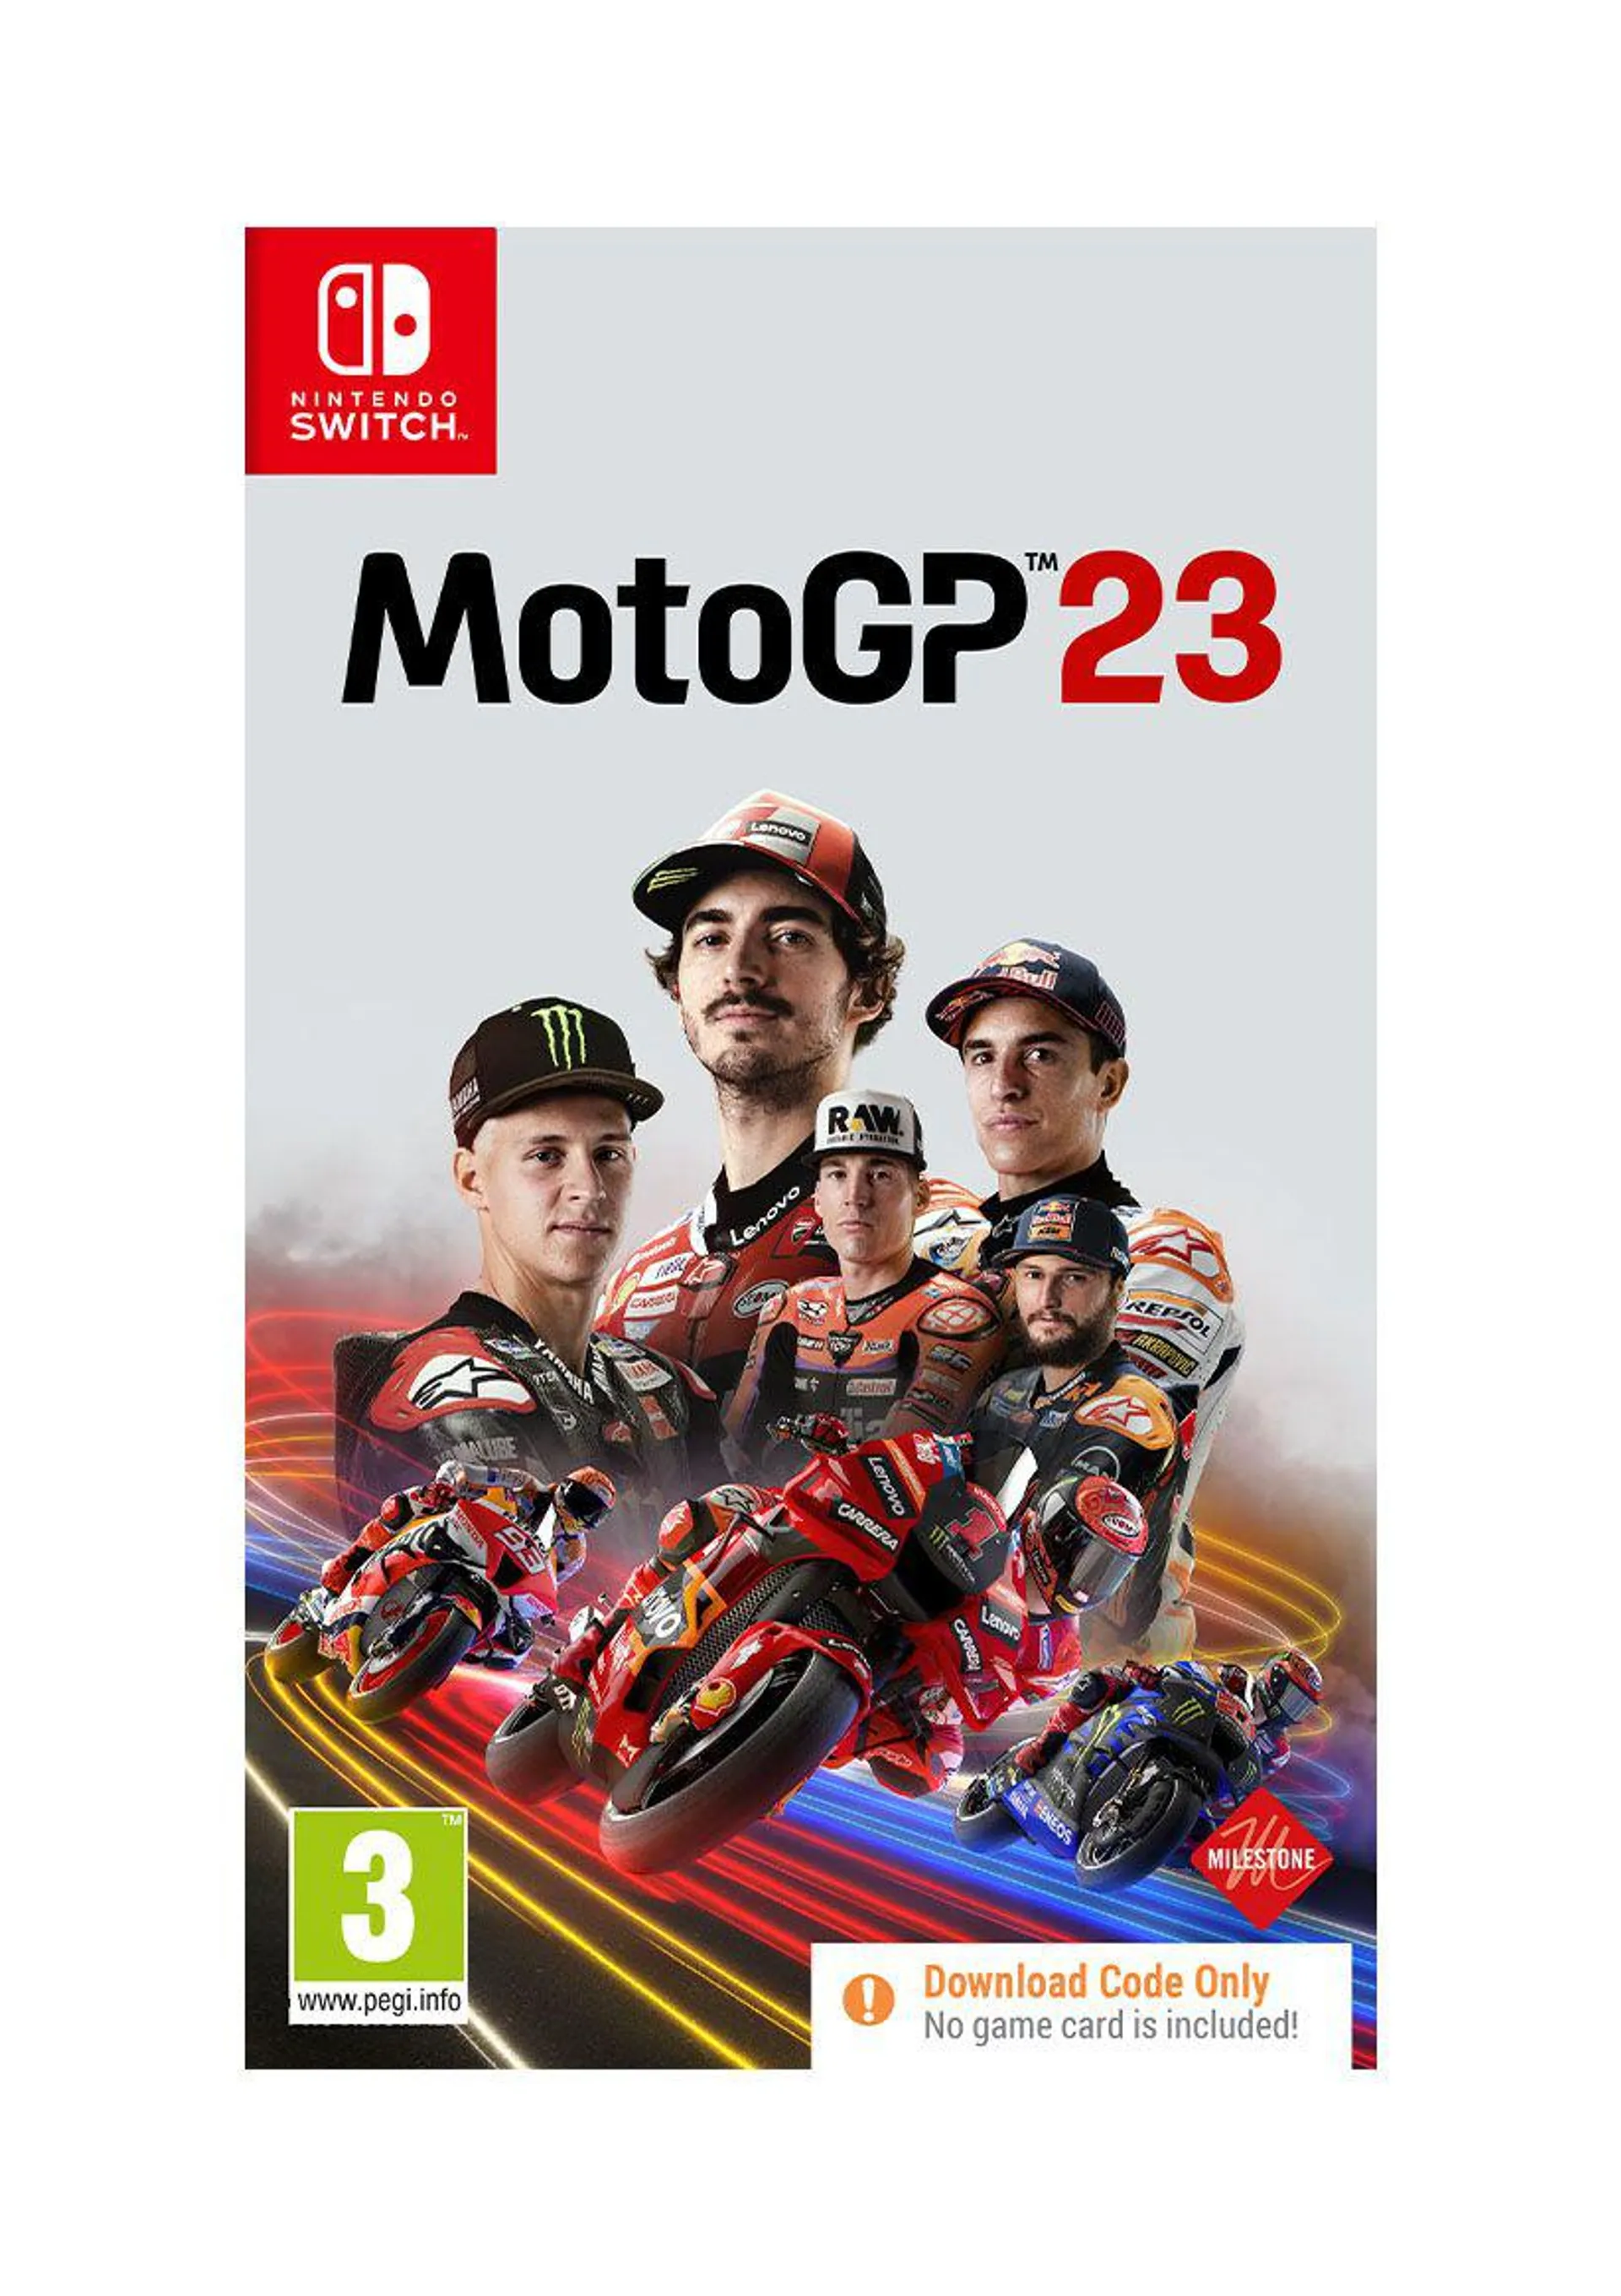 Moto GP 23 (SWITCH) on Nintendo Switch